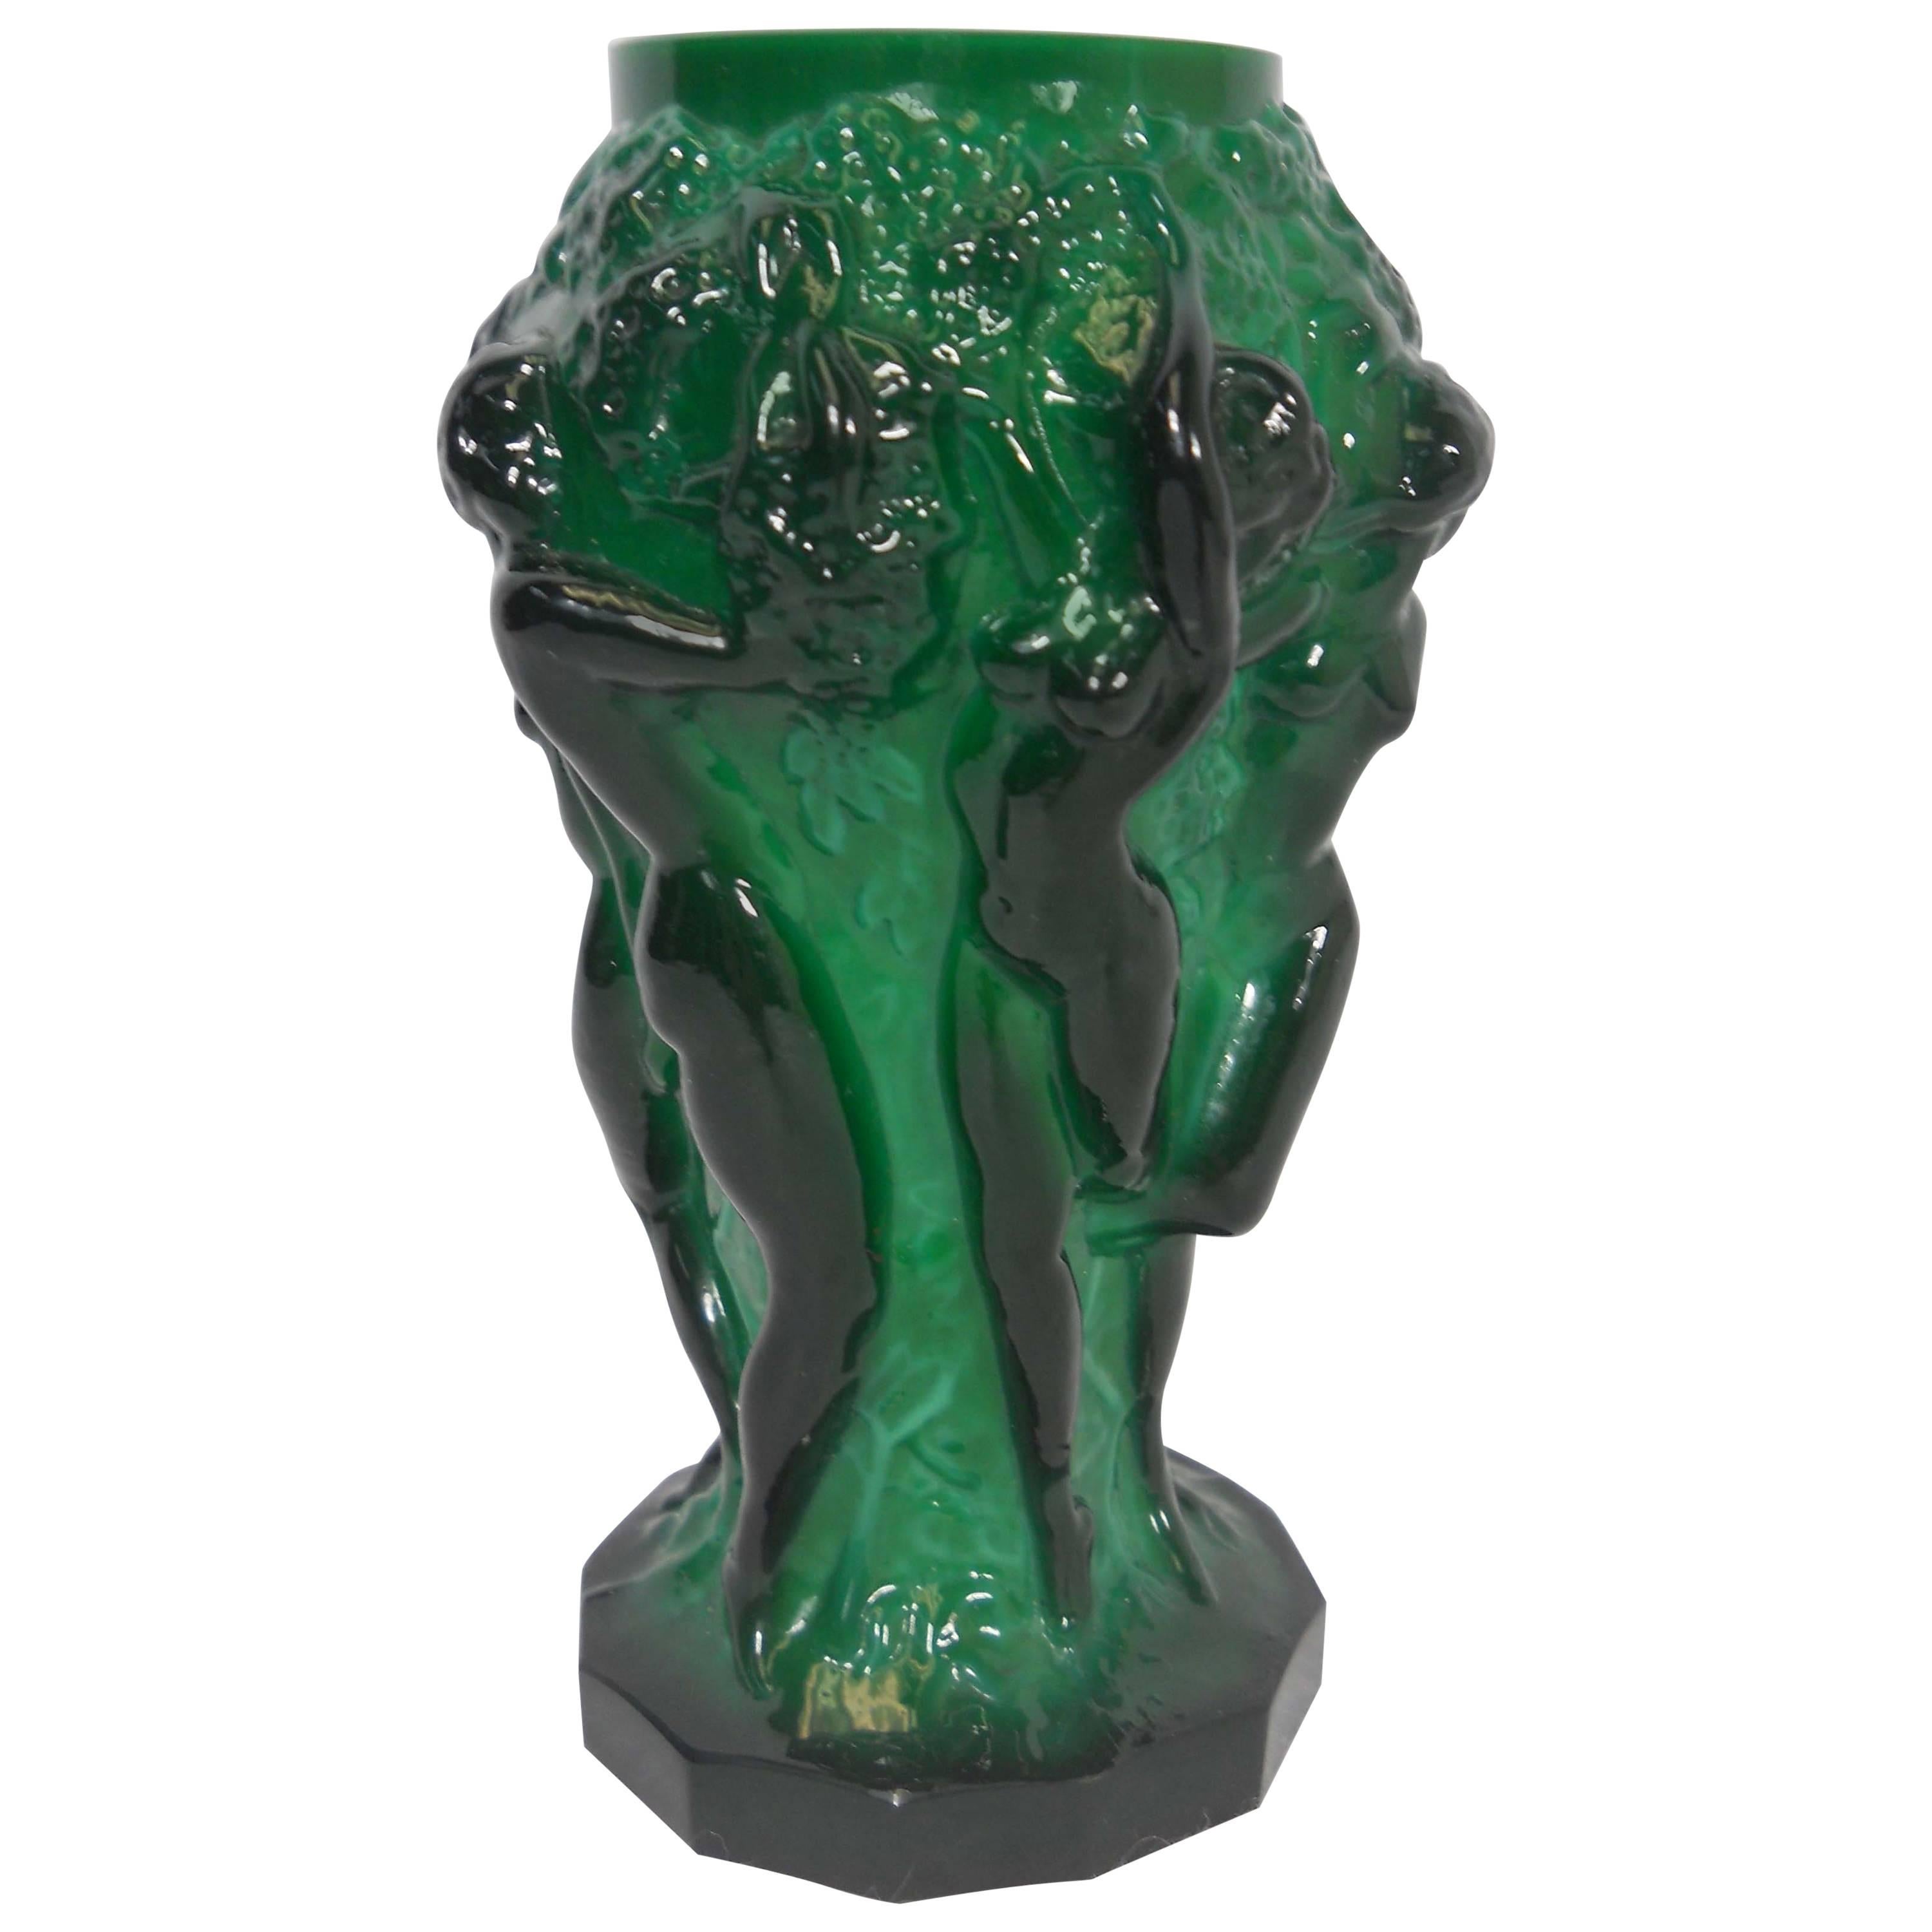 Art Deco Malachite Glass Vase by Riedel Glass for Schlevogt's 1930s Ingrid Line